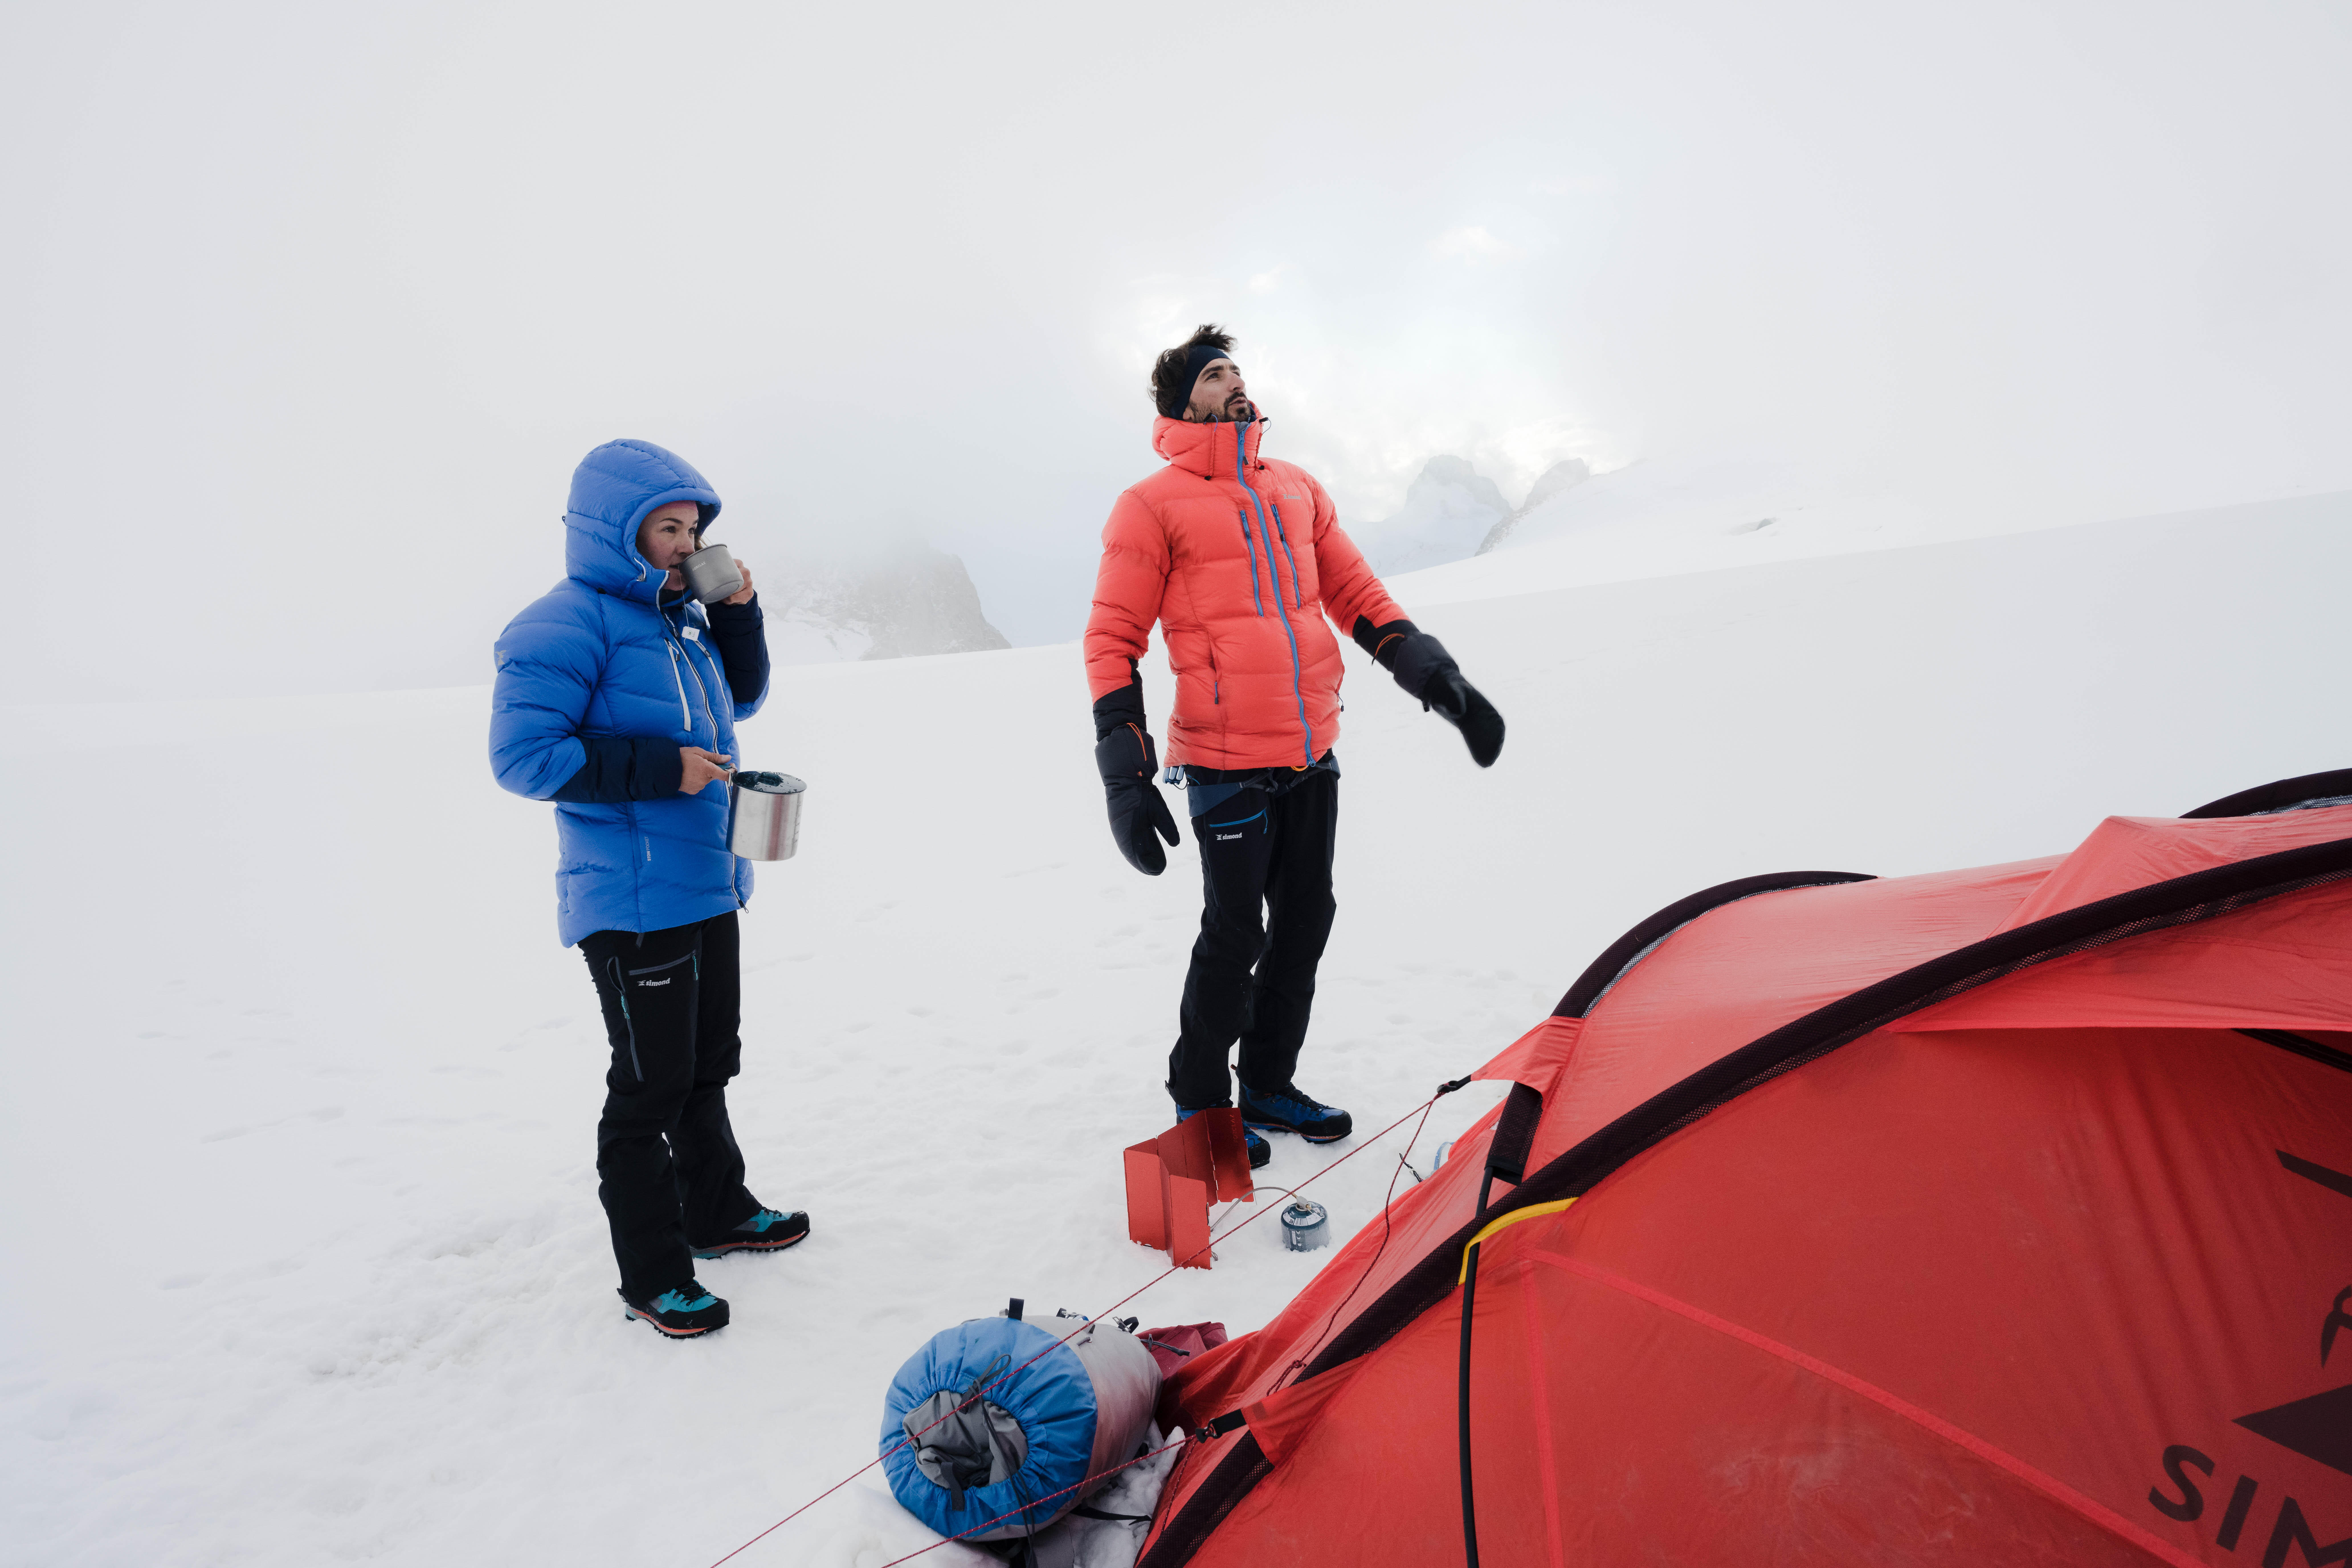 Men's Down Winter Jacket -29°C - Red - SIMOND